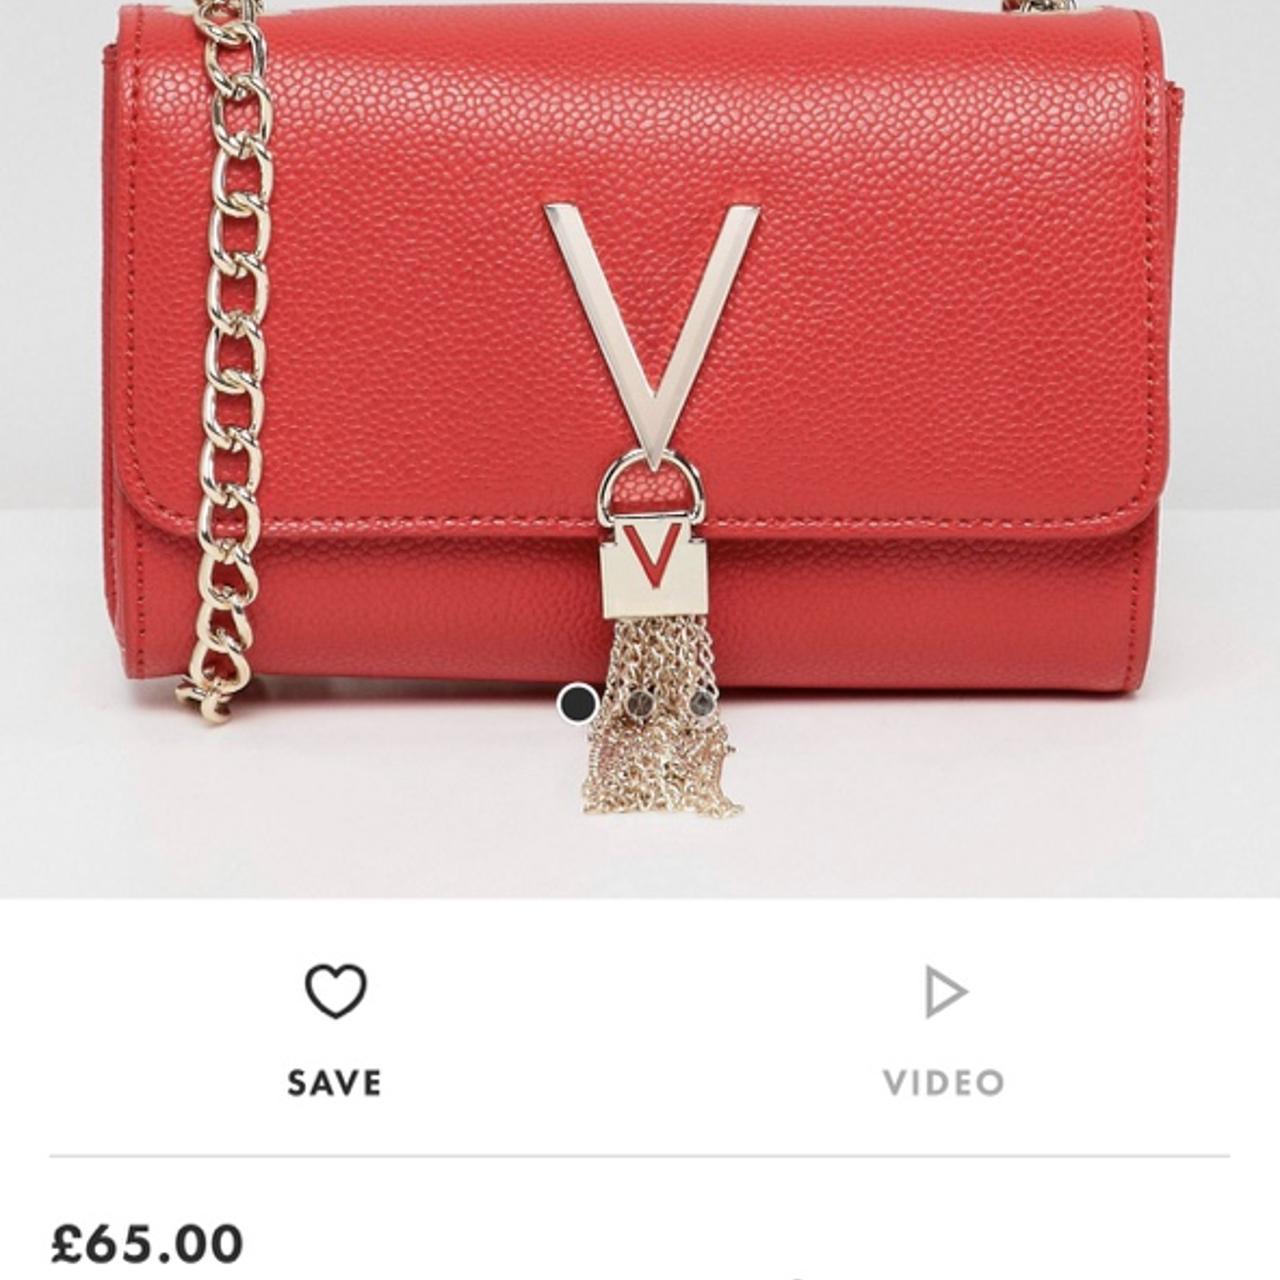 Valentino Women's Divina Small Shoulder Bag - Red